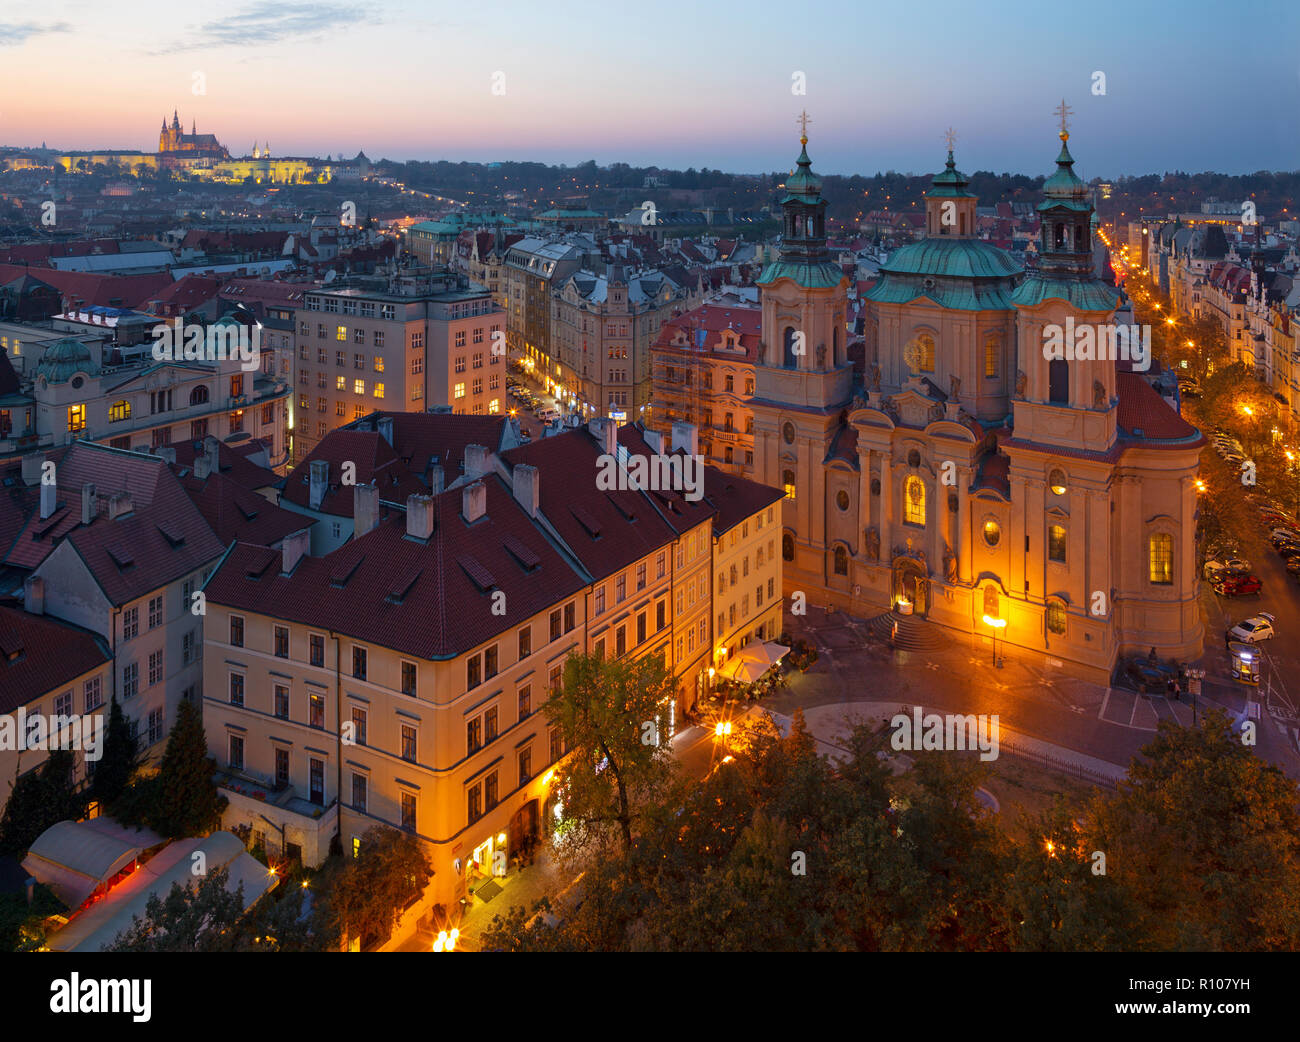 Praga - la iglesia de San Nicolás, plaza Staromestske y el casco viejo de la ciudad al anochecer. Foto de stock